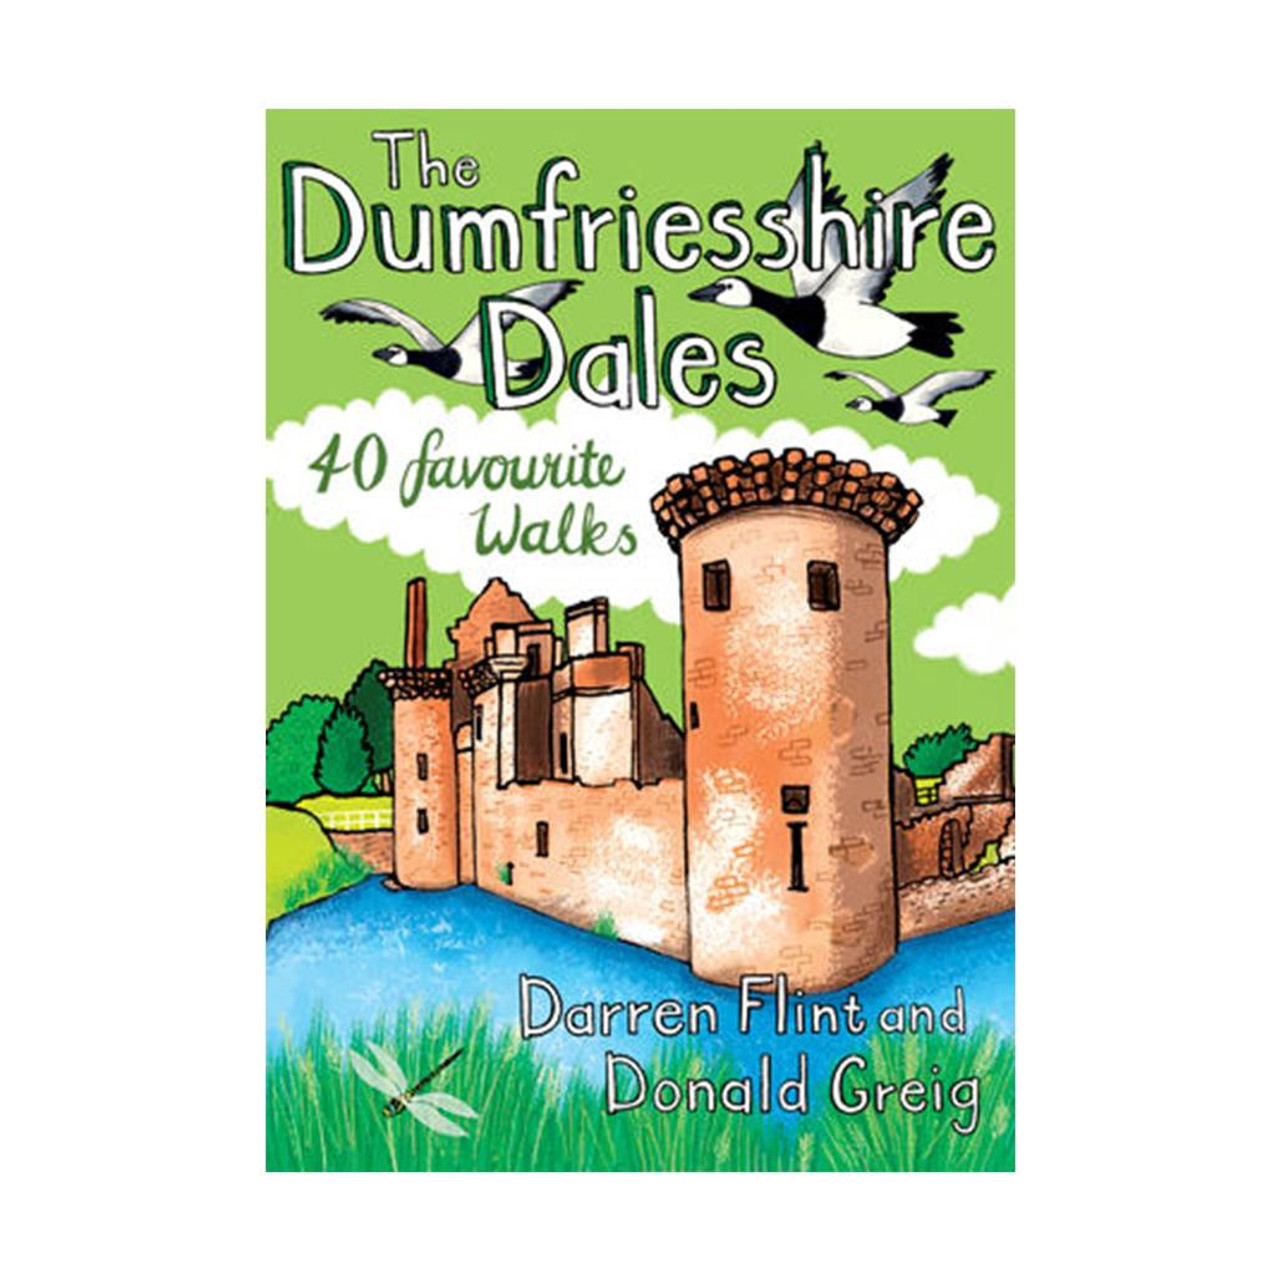 The Dumfriesshire Dales: 40 Favourite Walks